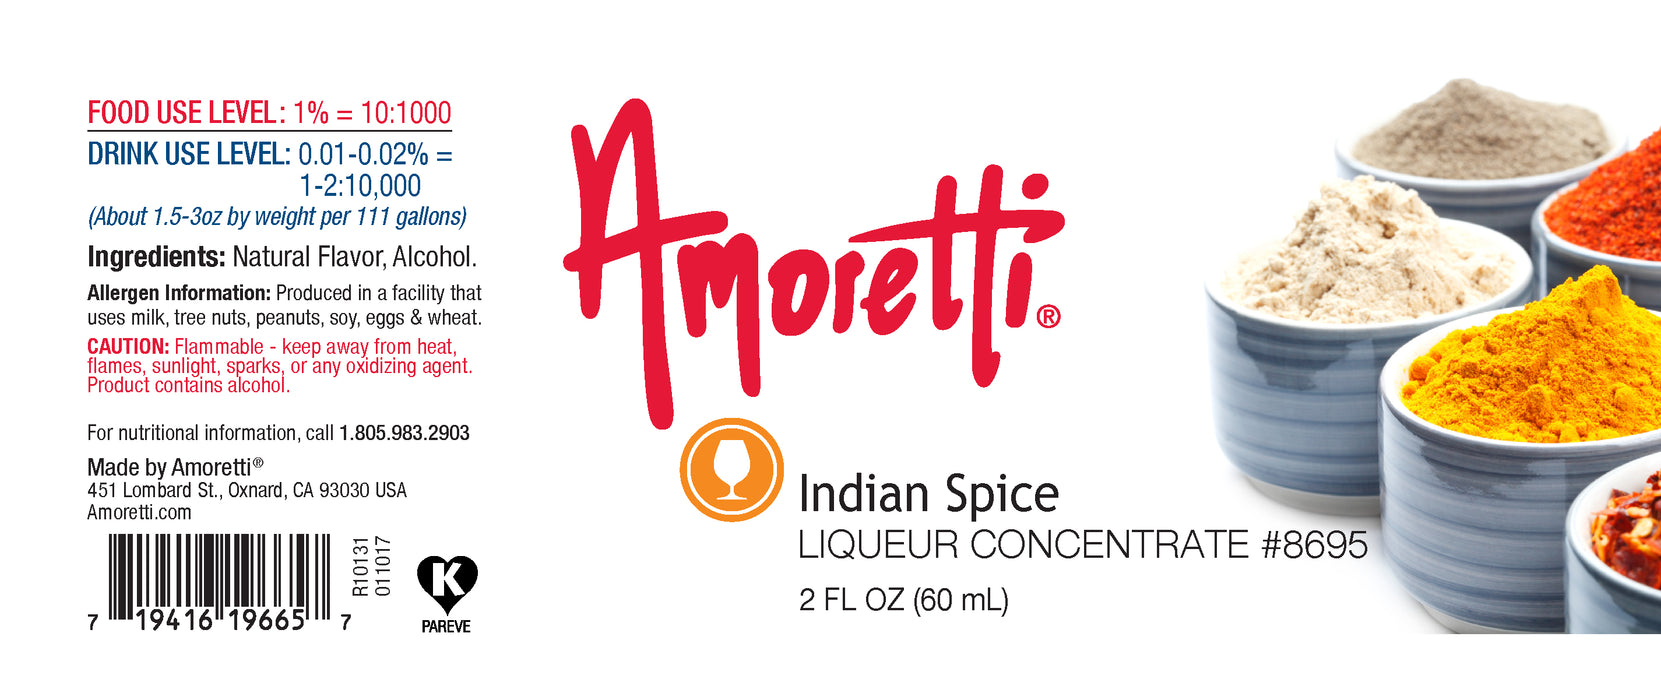 Indian Spice Liqueur Concentrate